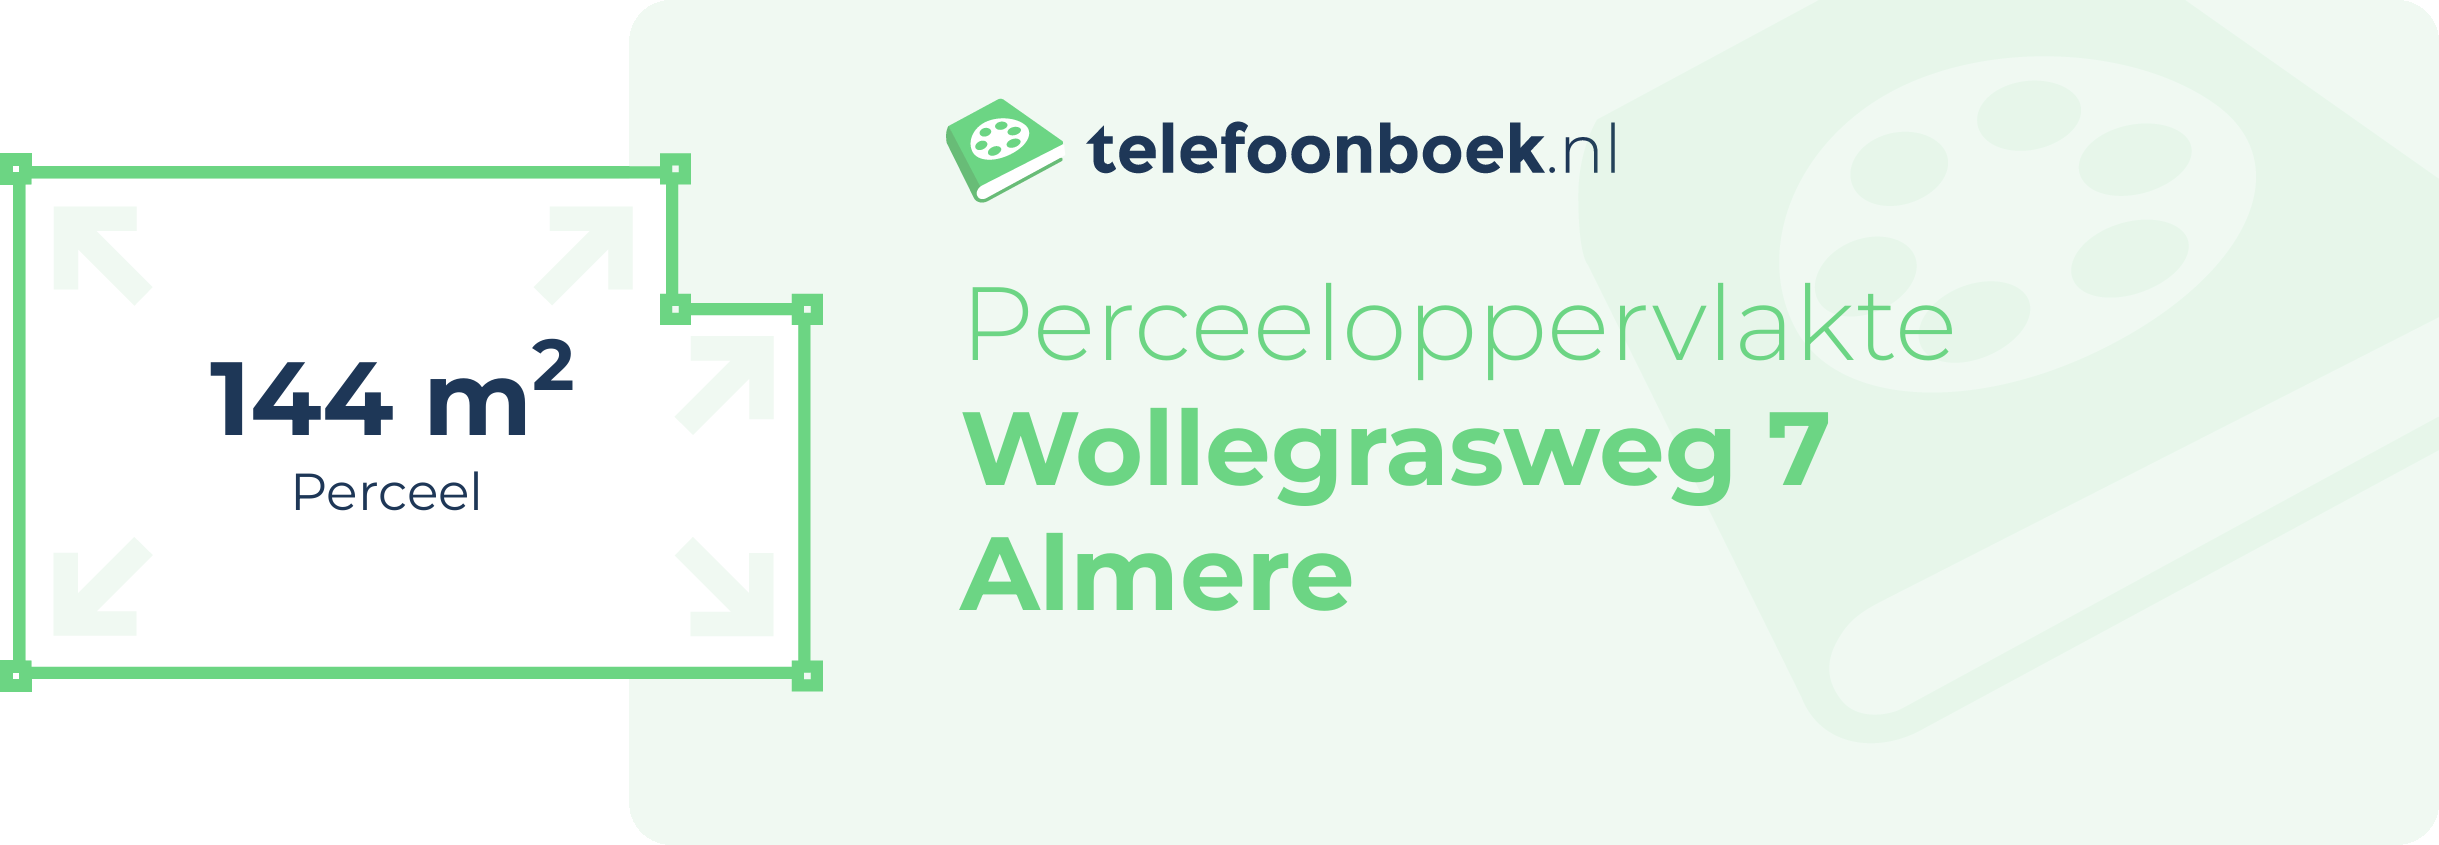 Perceeloppervlakte Wollegrasweg 7 Almere